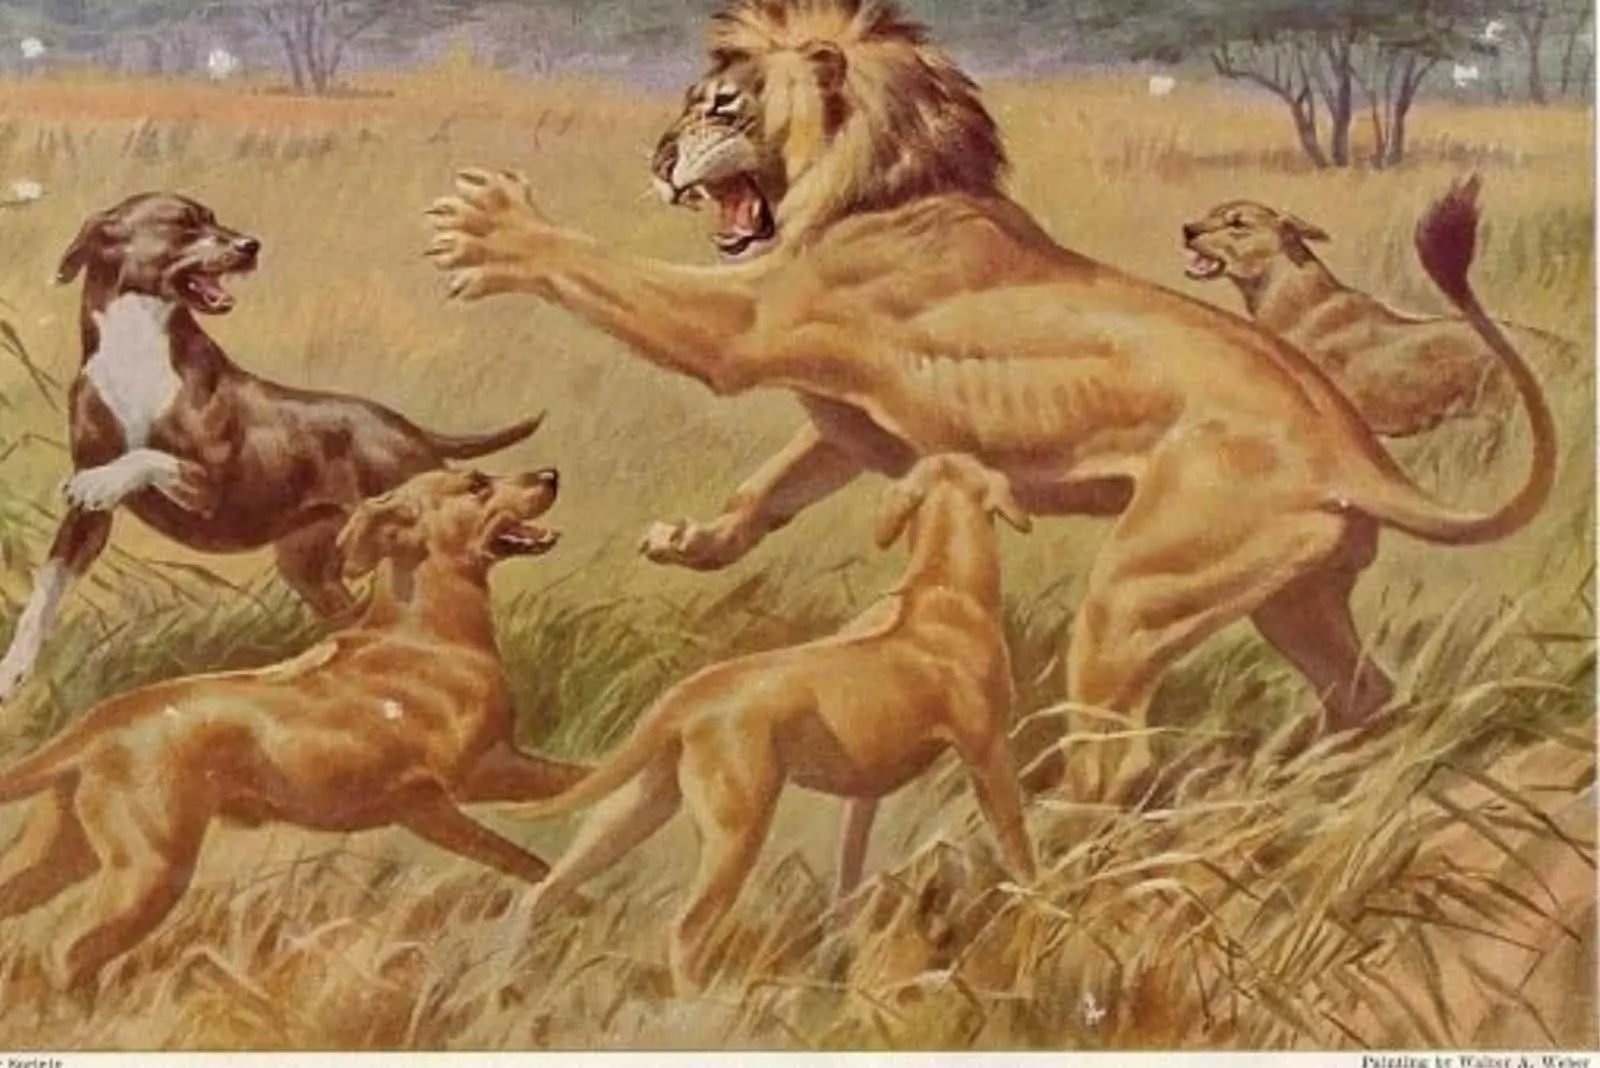 Rhodesian Ridgeback and lion fight